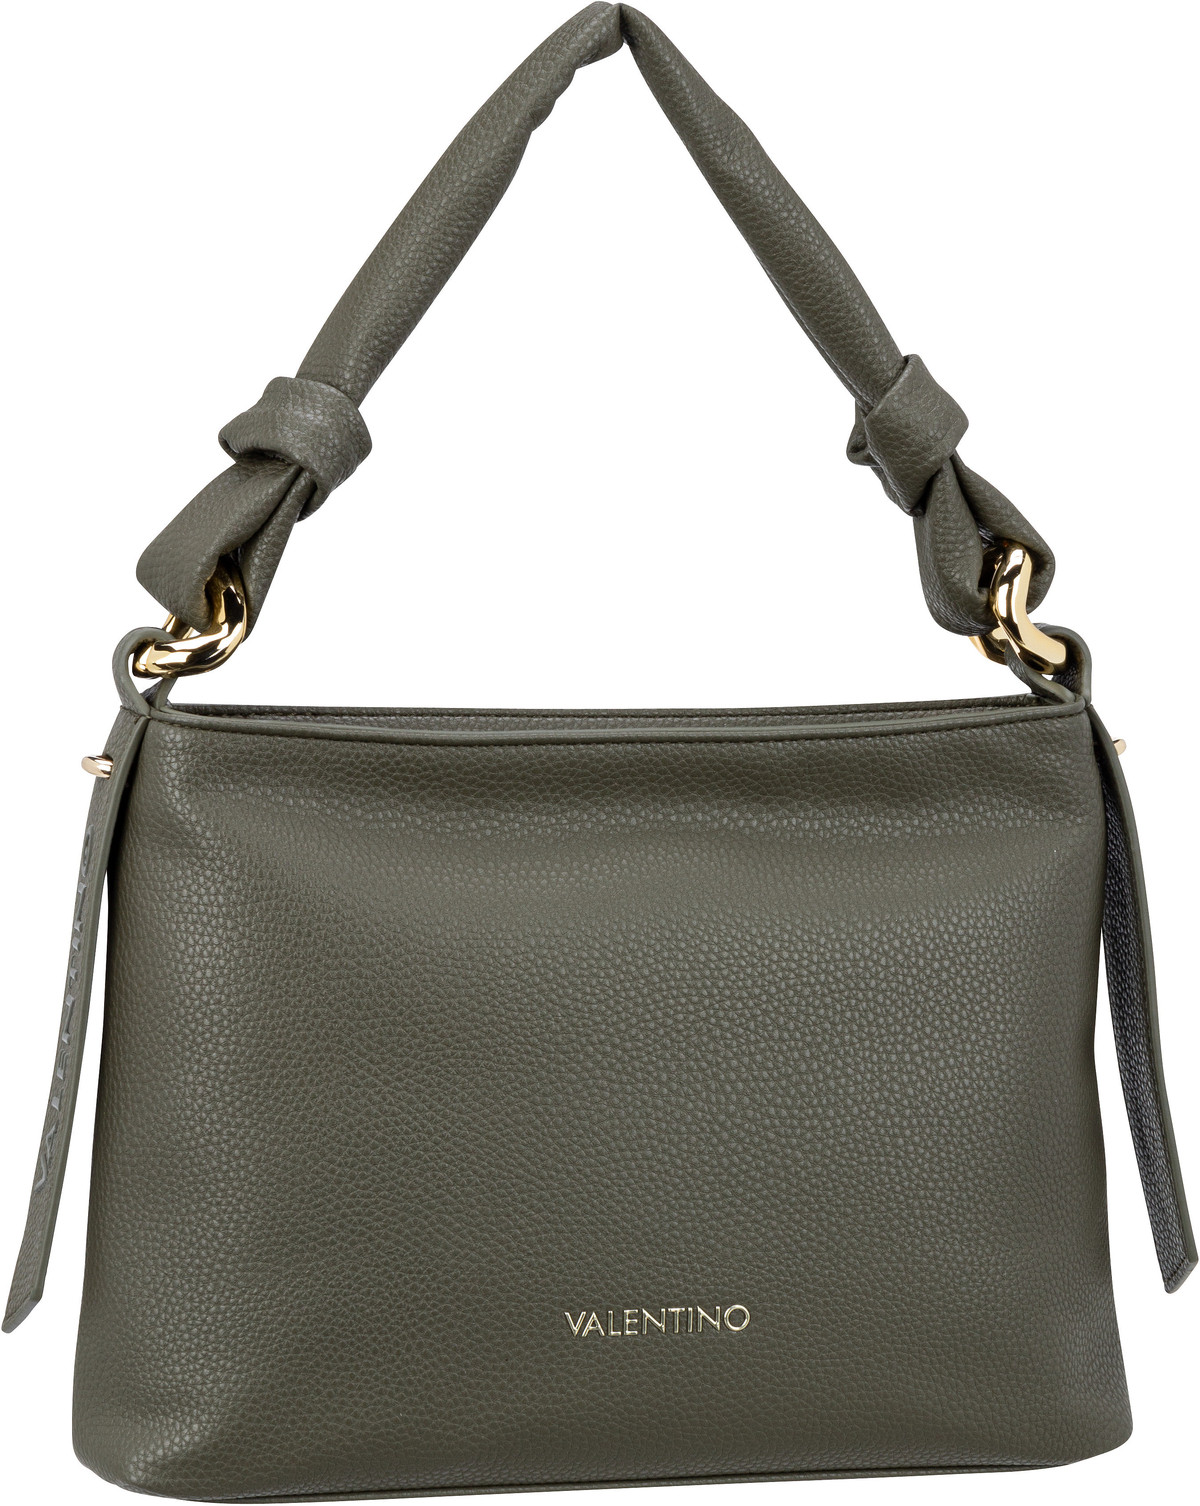 Valentino Ring RE Hobo Bag L02  in Militare (5.9 Liter), Handtasche